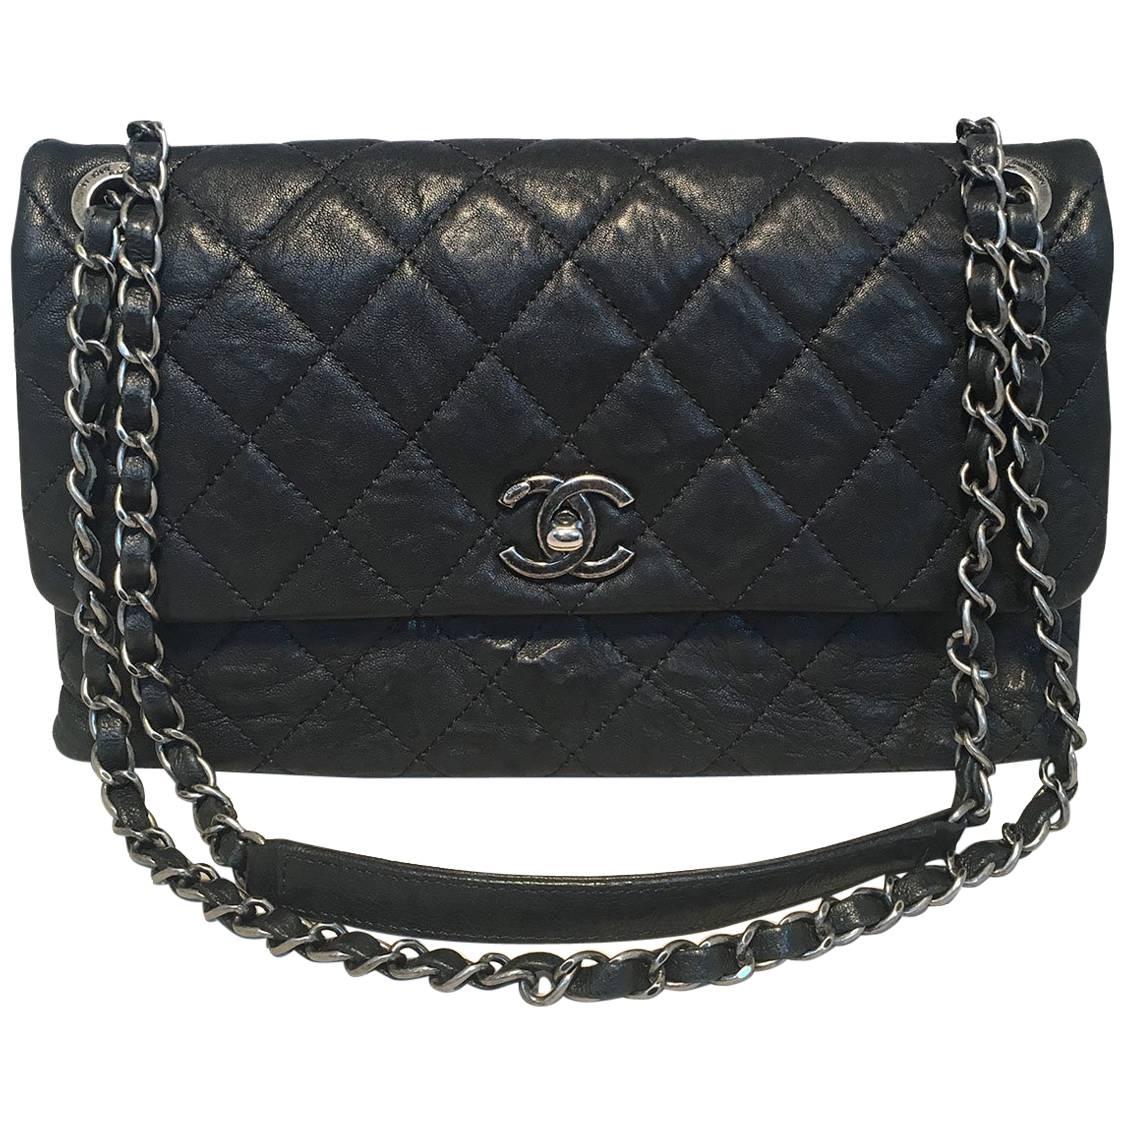 Chanel Quilted Black Aged Calfskin Single Flap Classic Shoulder Bag